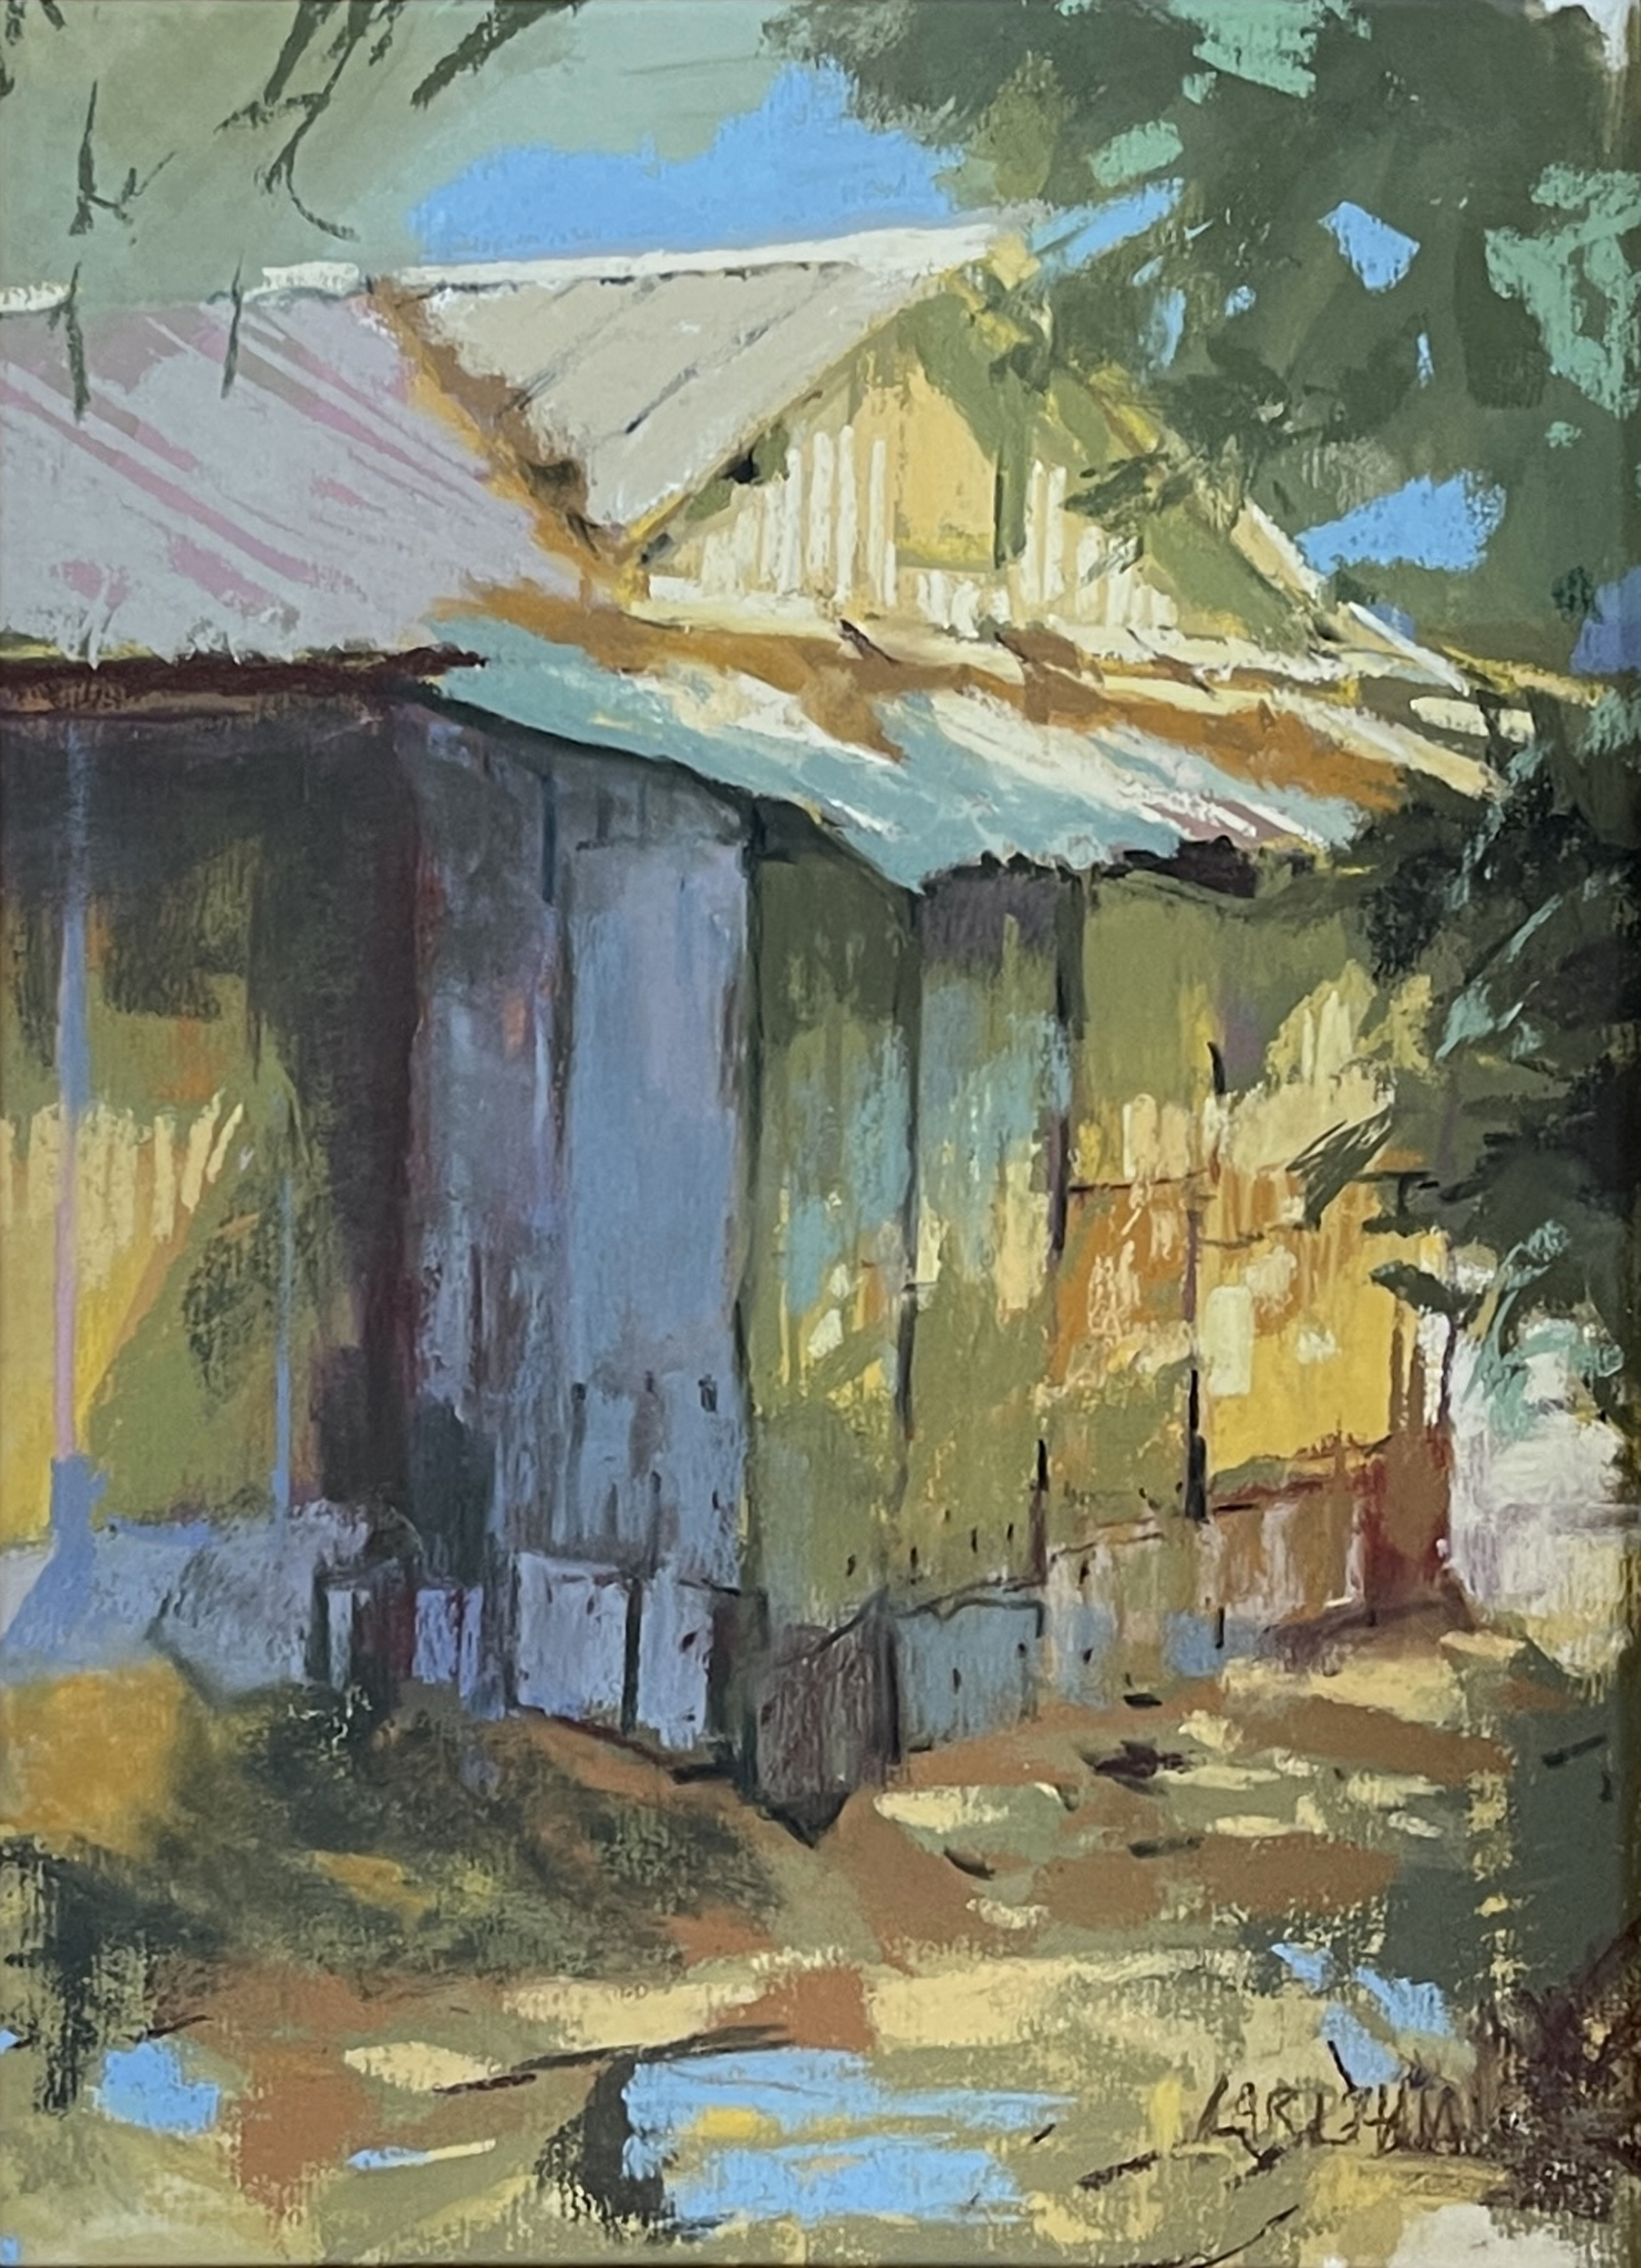 Margaret Larlham, "Golden Oldie," 12 x 9 in., pastel